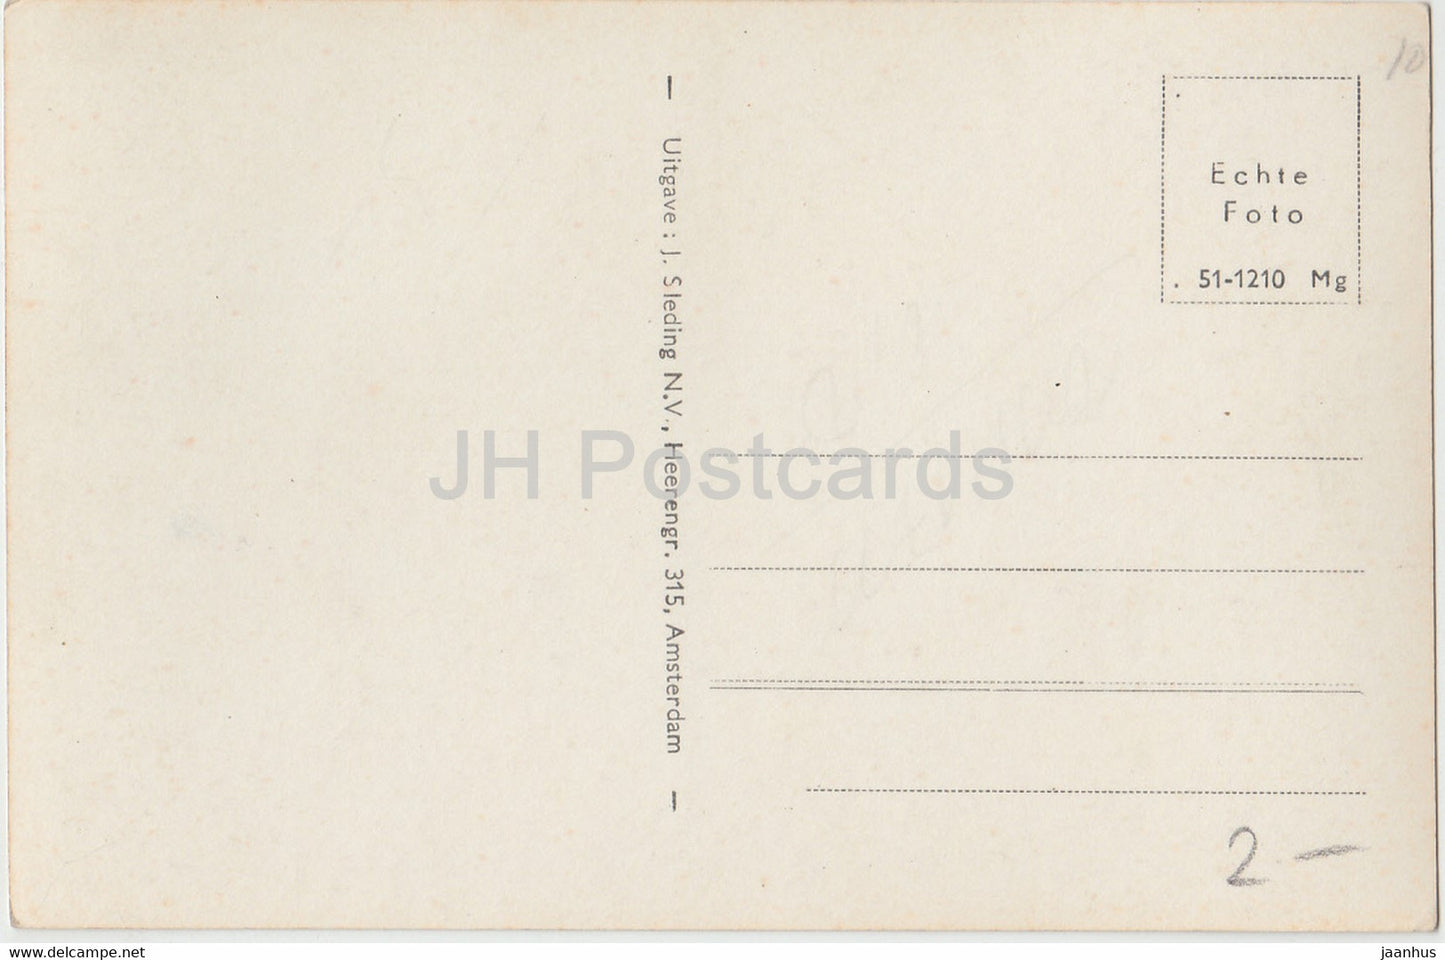 Den Haag - Paleis Noordeinde - old postcard - Netherlands - unused